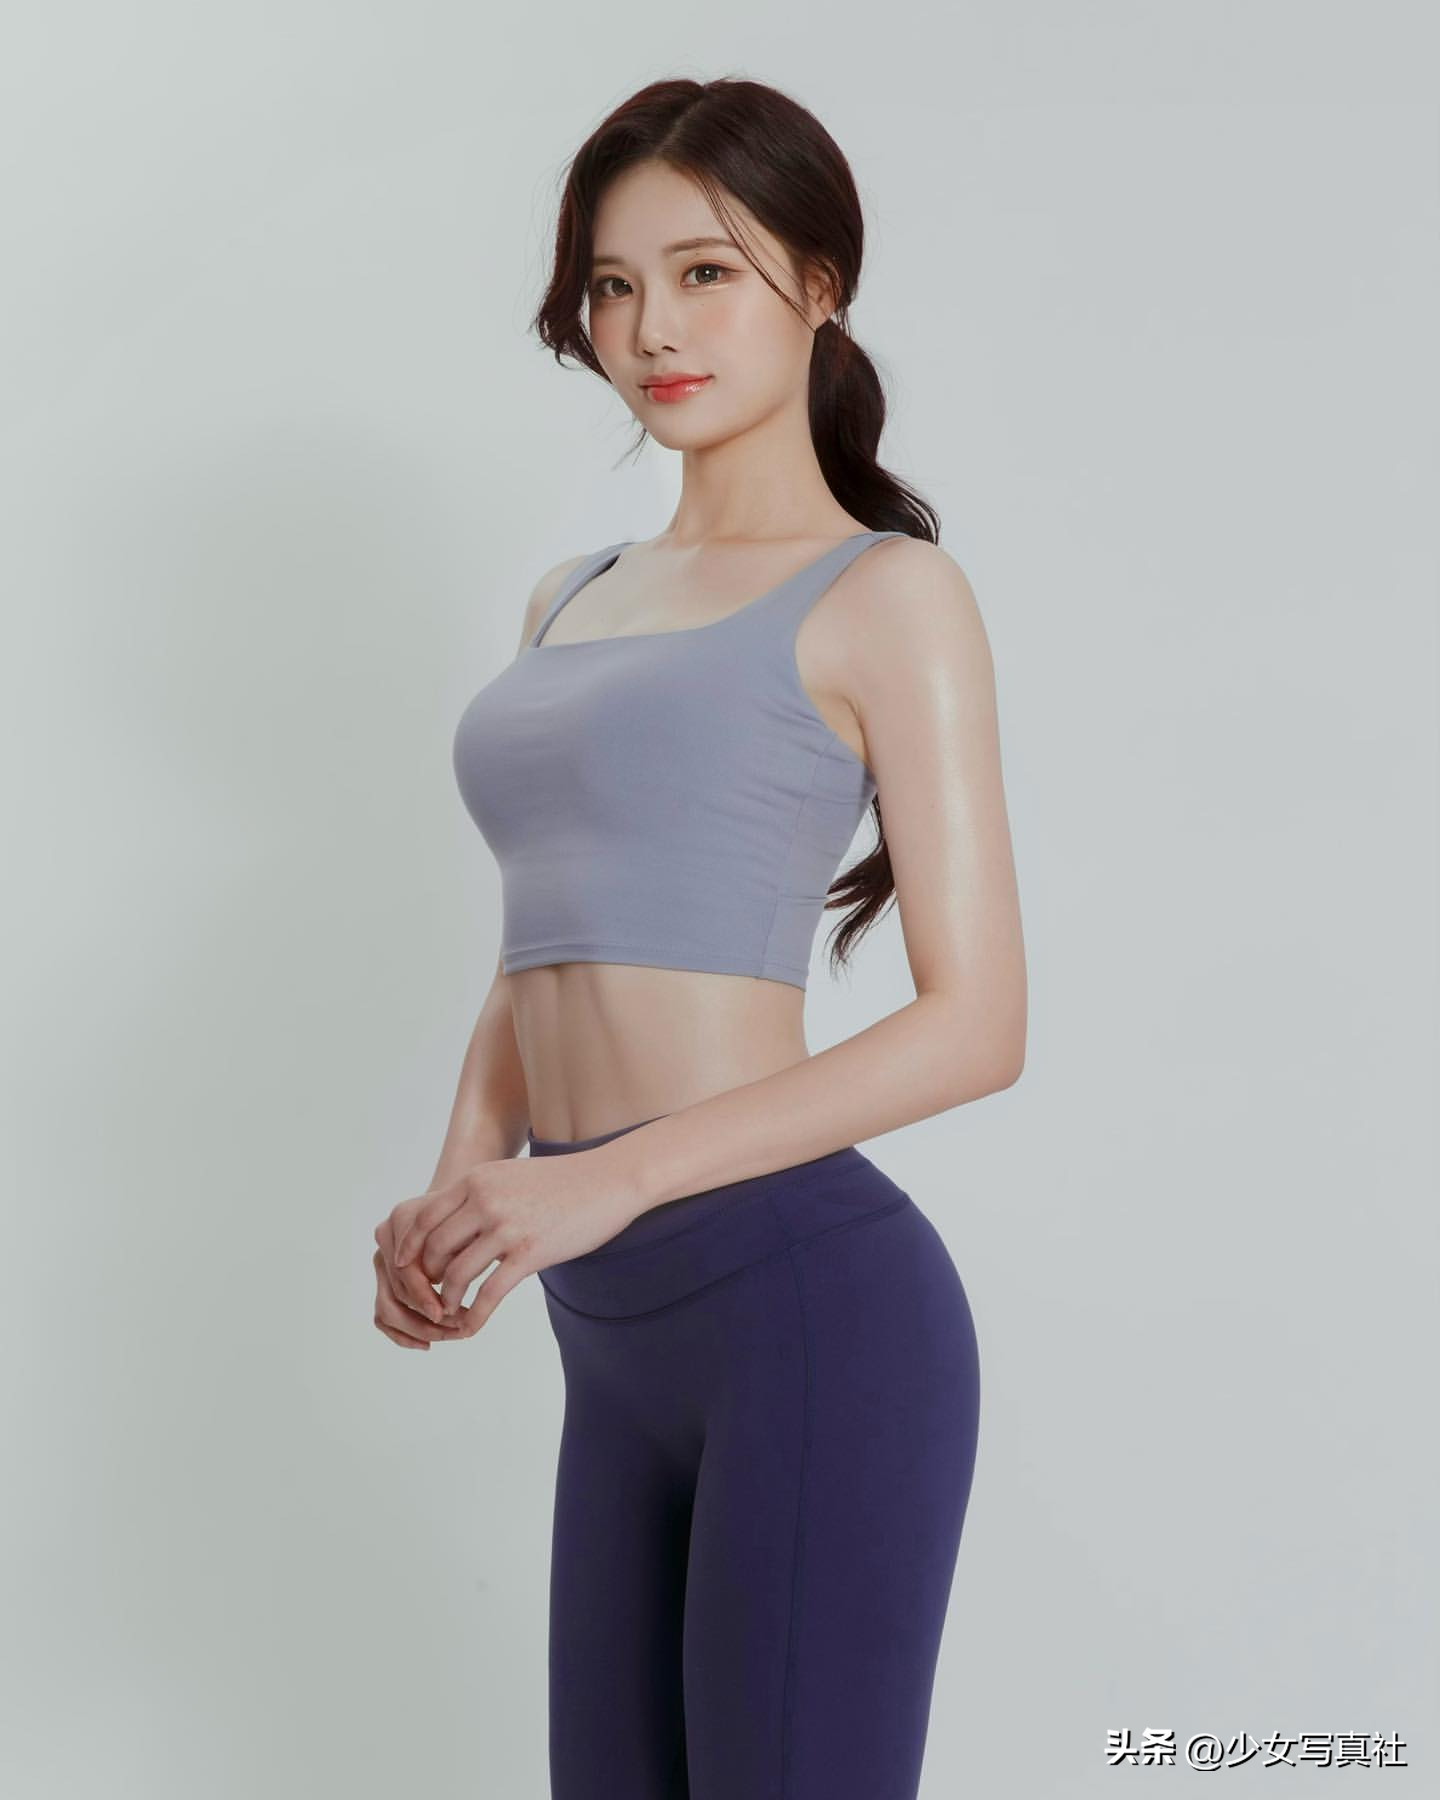 Perfect body, Korean cheerleading goddess Choi Hong-ra - iNEWS